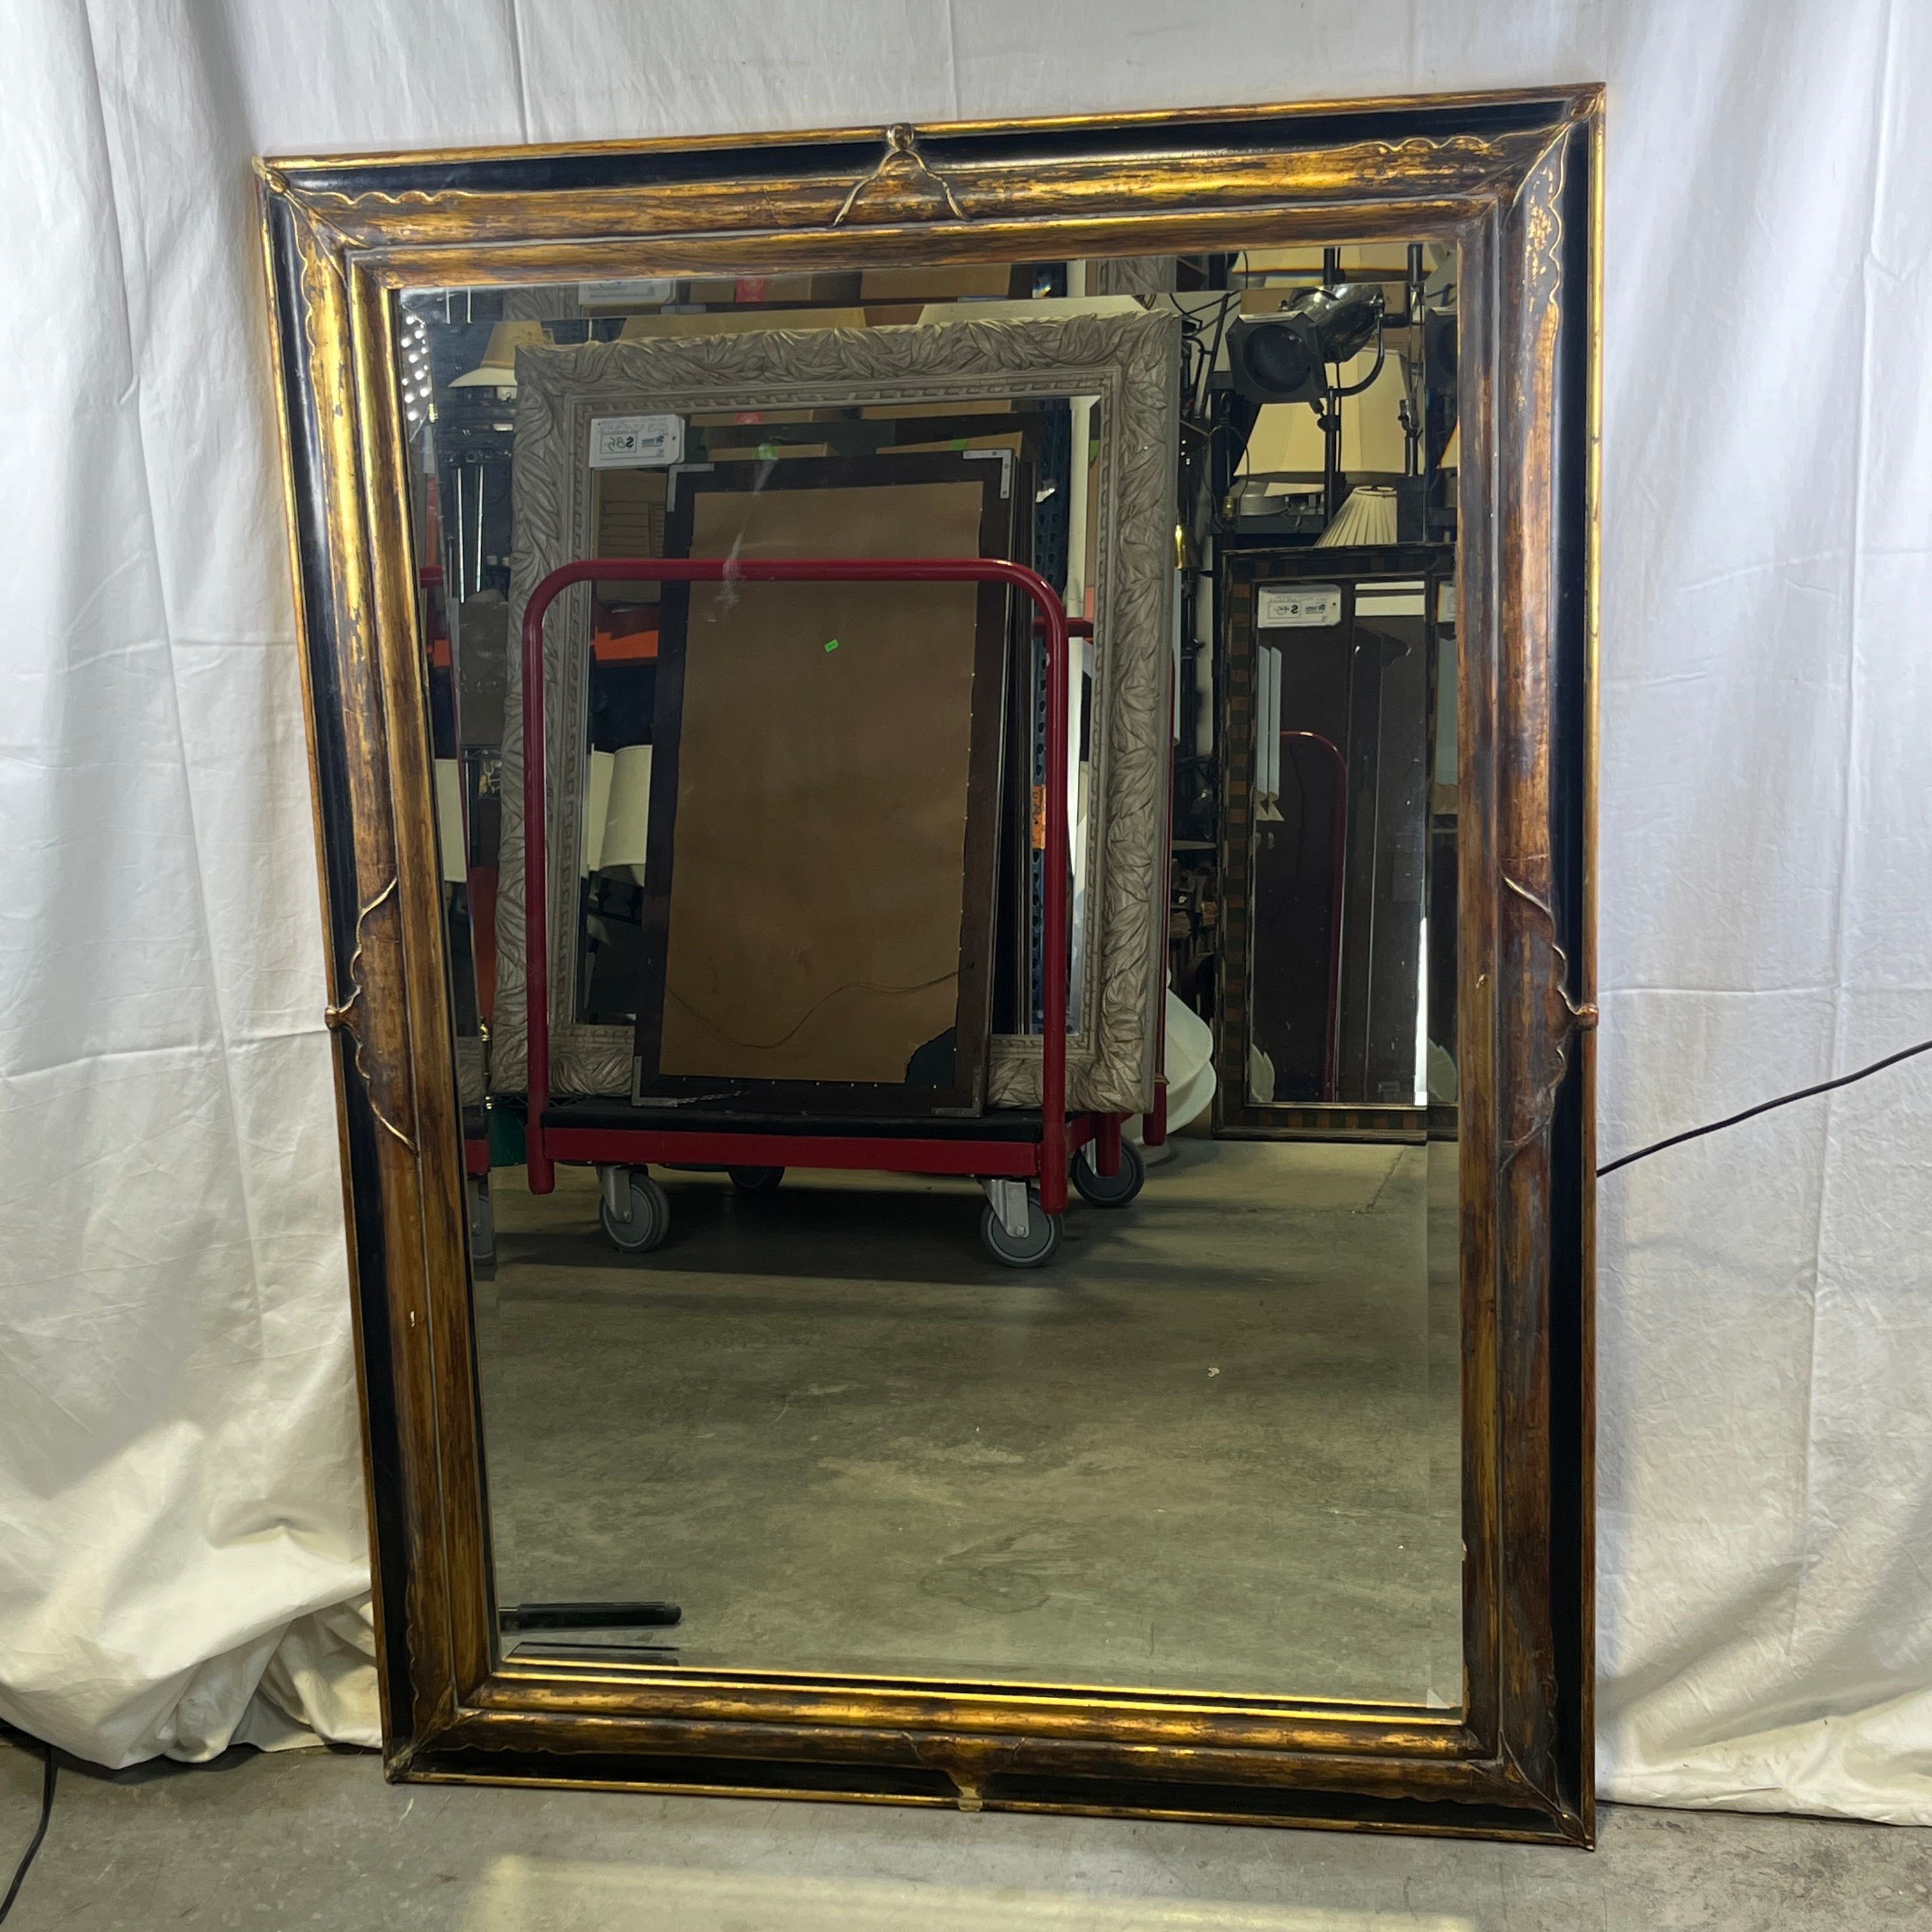 Decorative Arts Inc. Dual Hang Black Gold with Patina Framed Beveled Wall Hanging Mirror